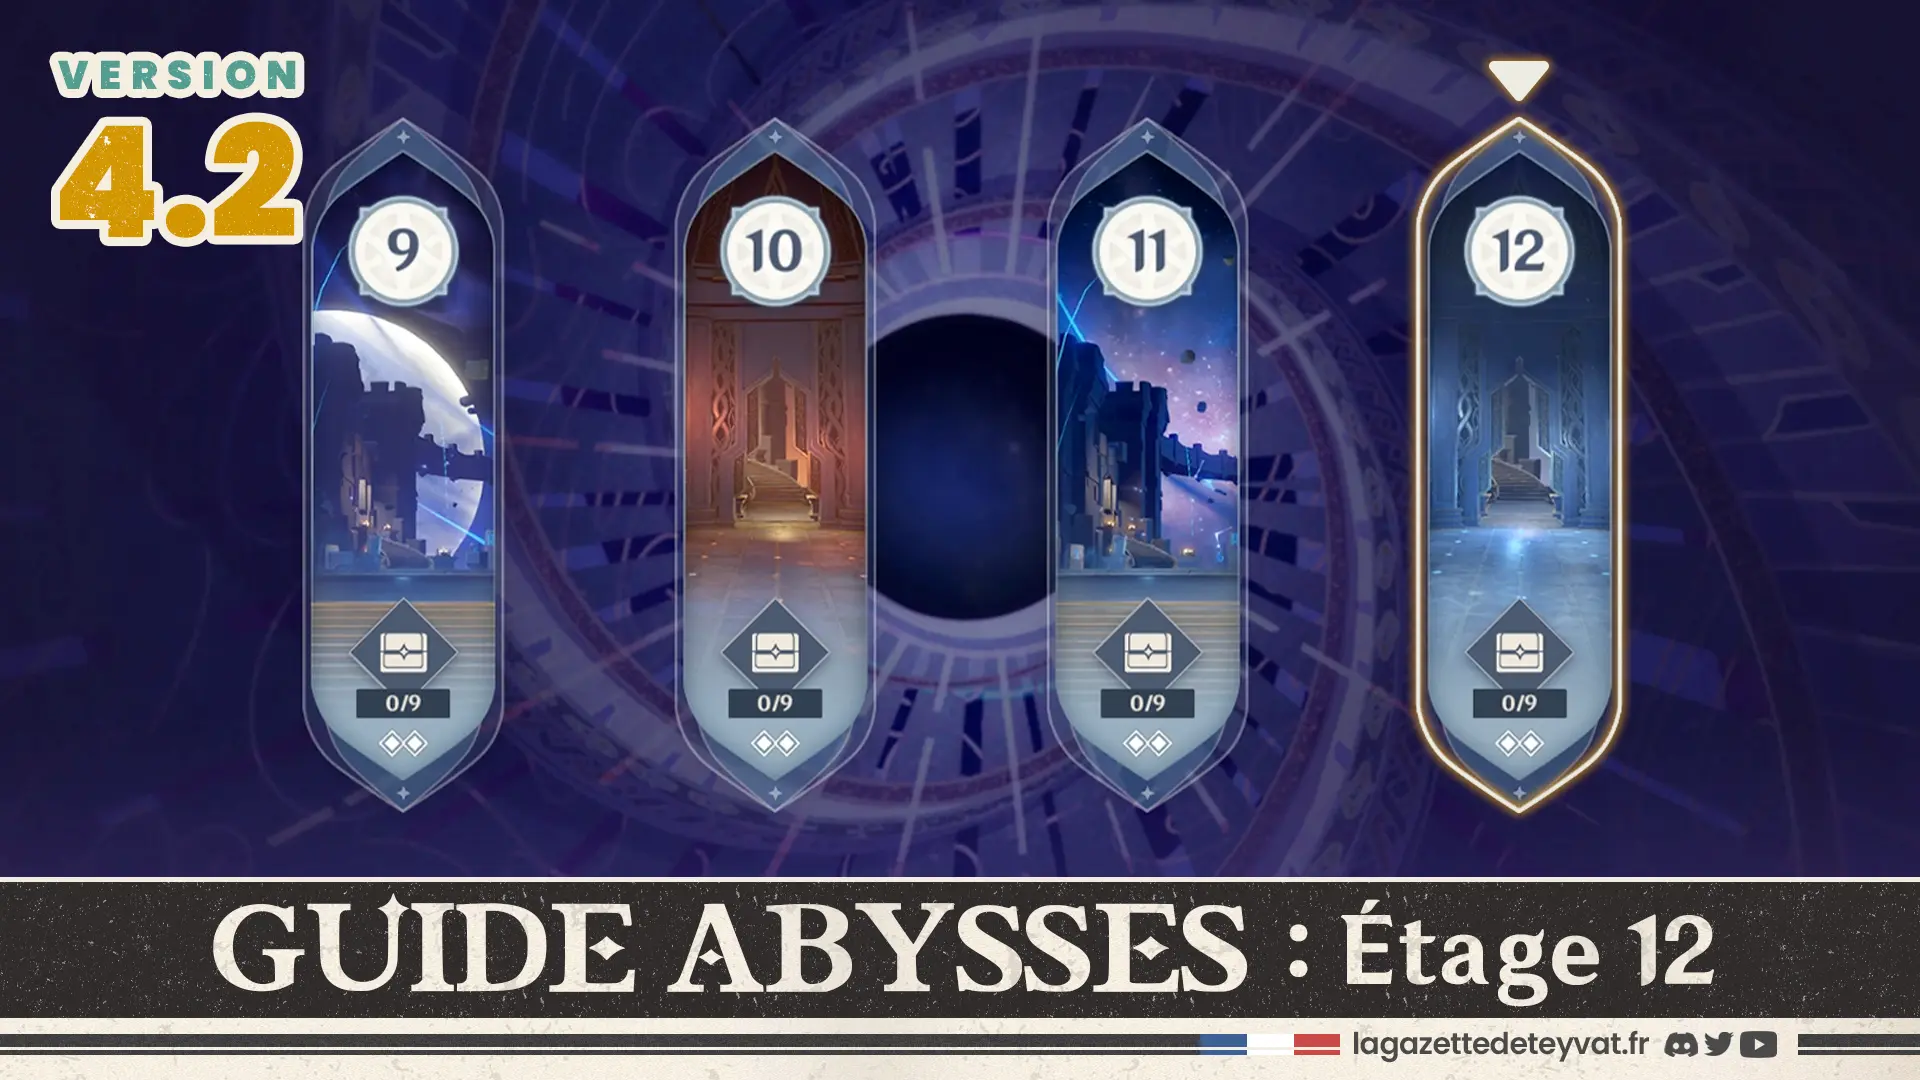 Abysses 4.2 étage 12